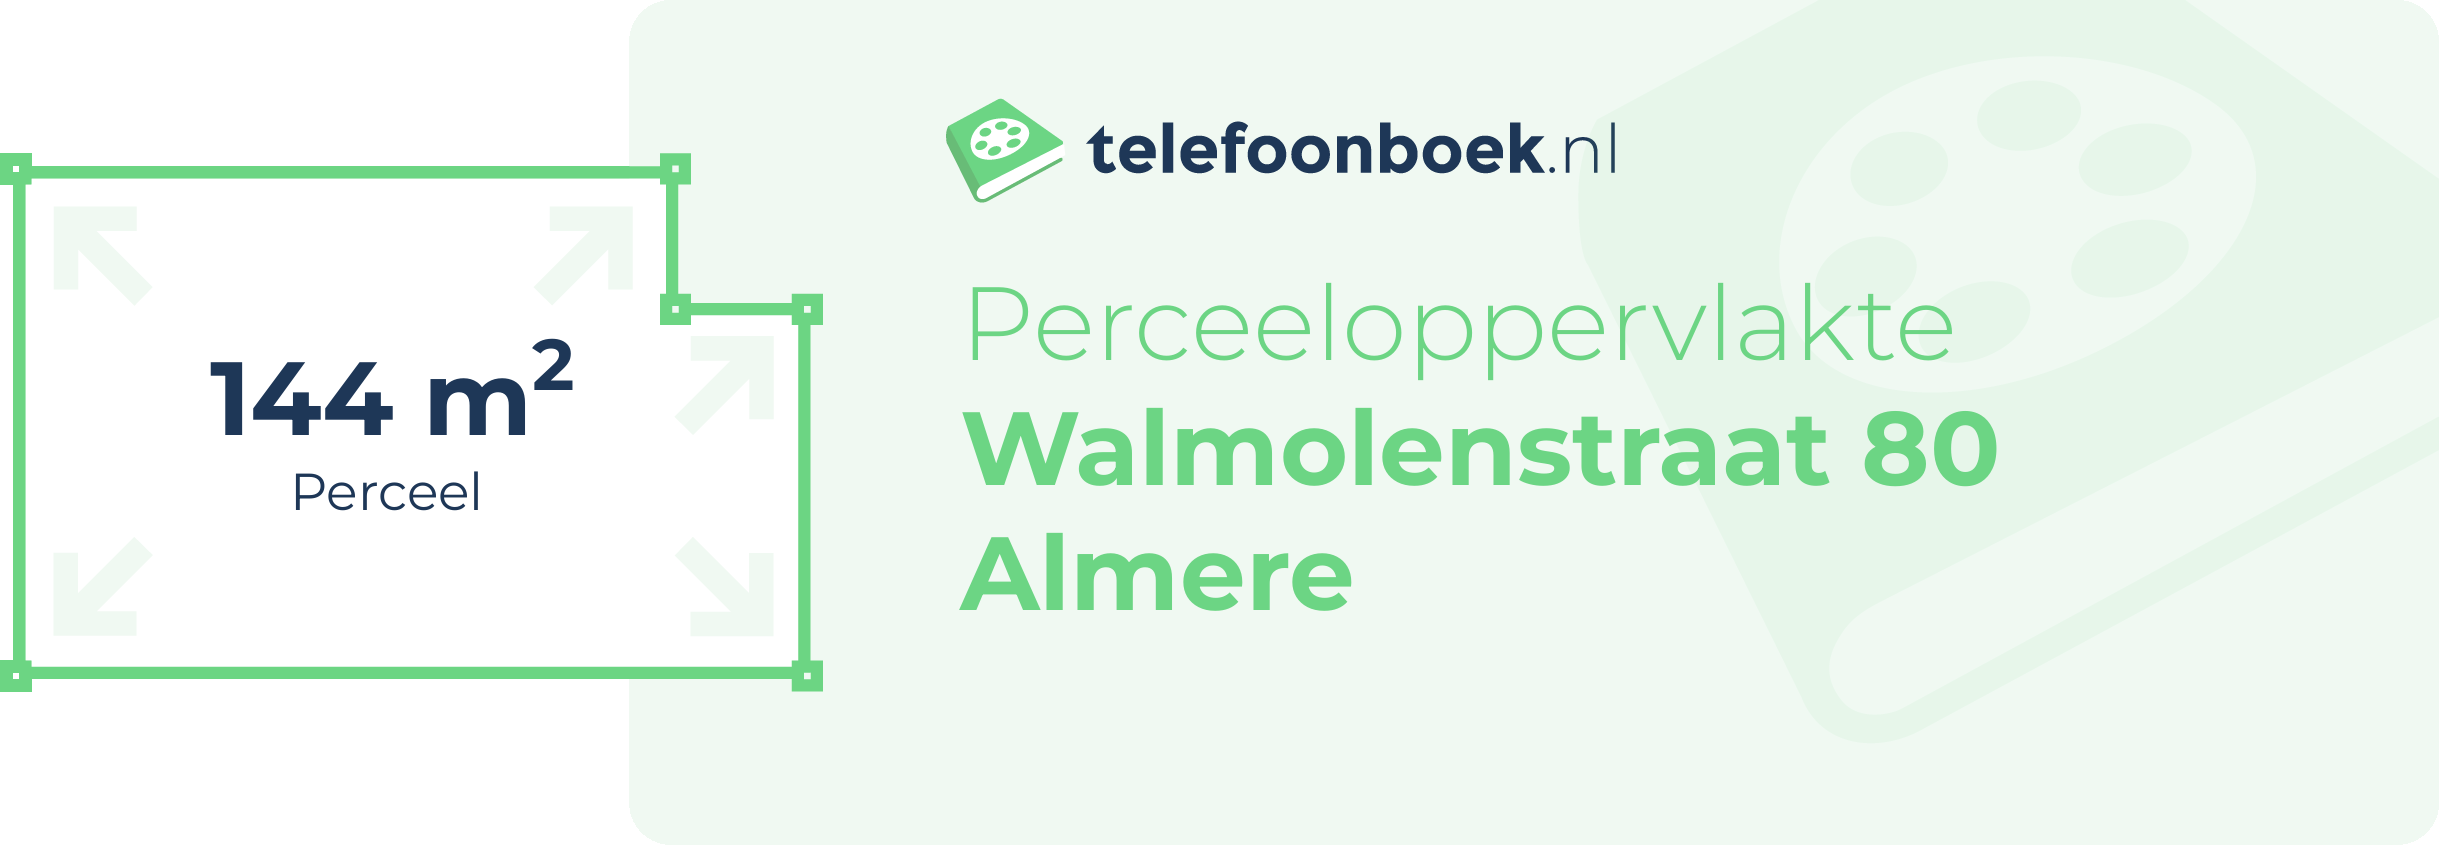 Perceeloppervlakte Walmolenstraat 80 Almere